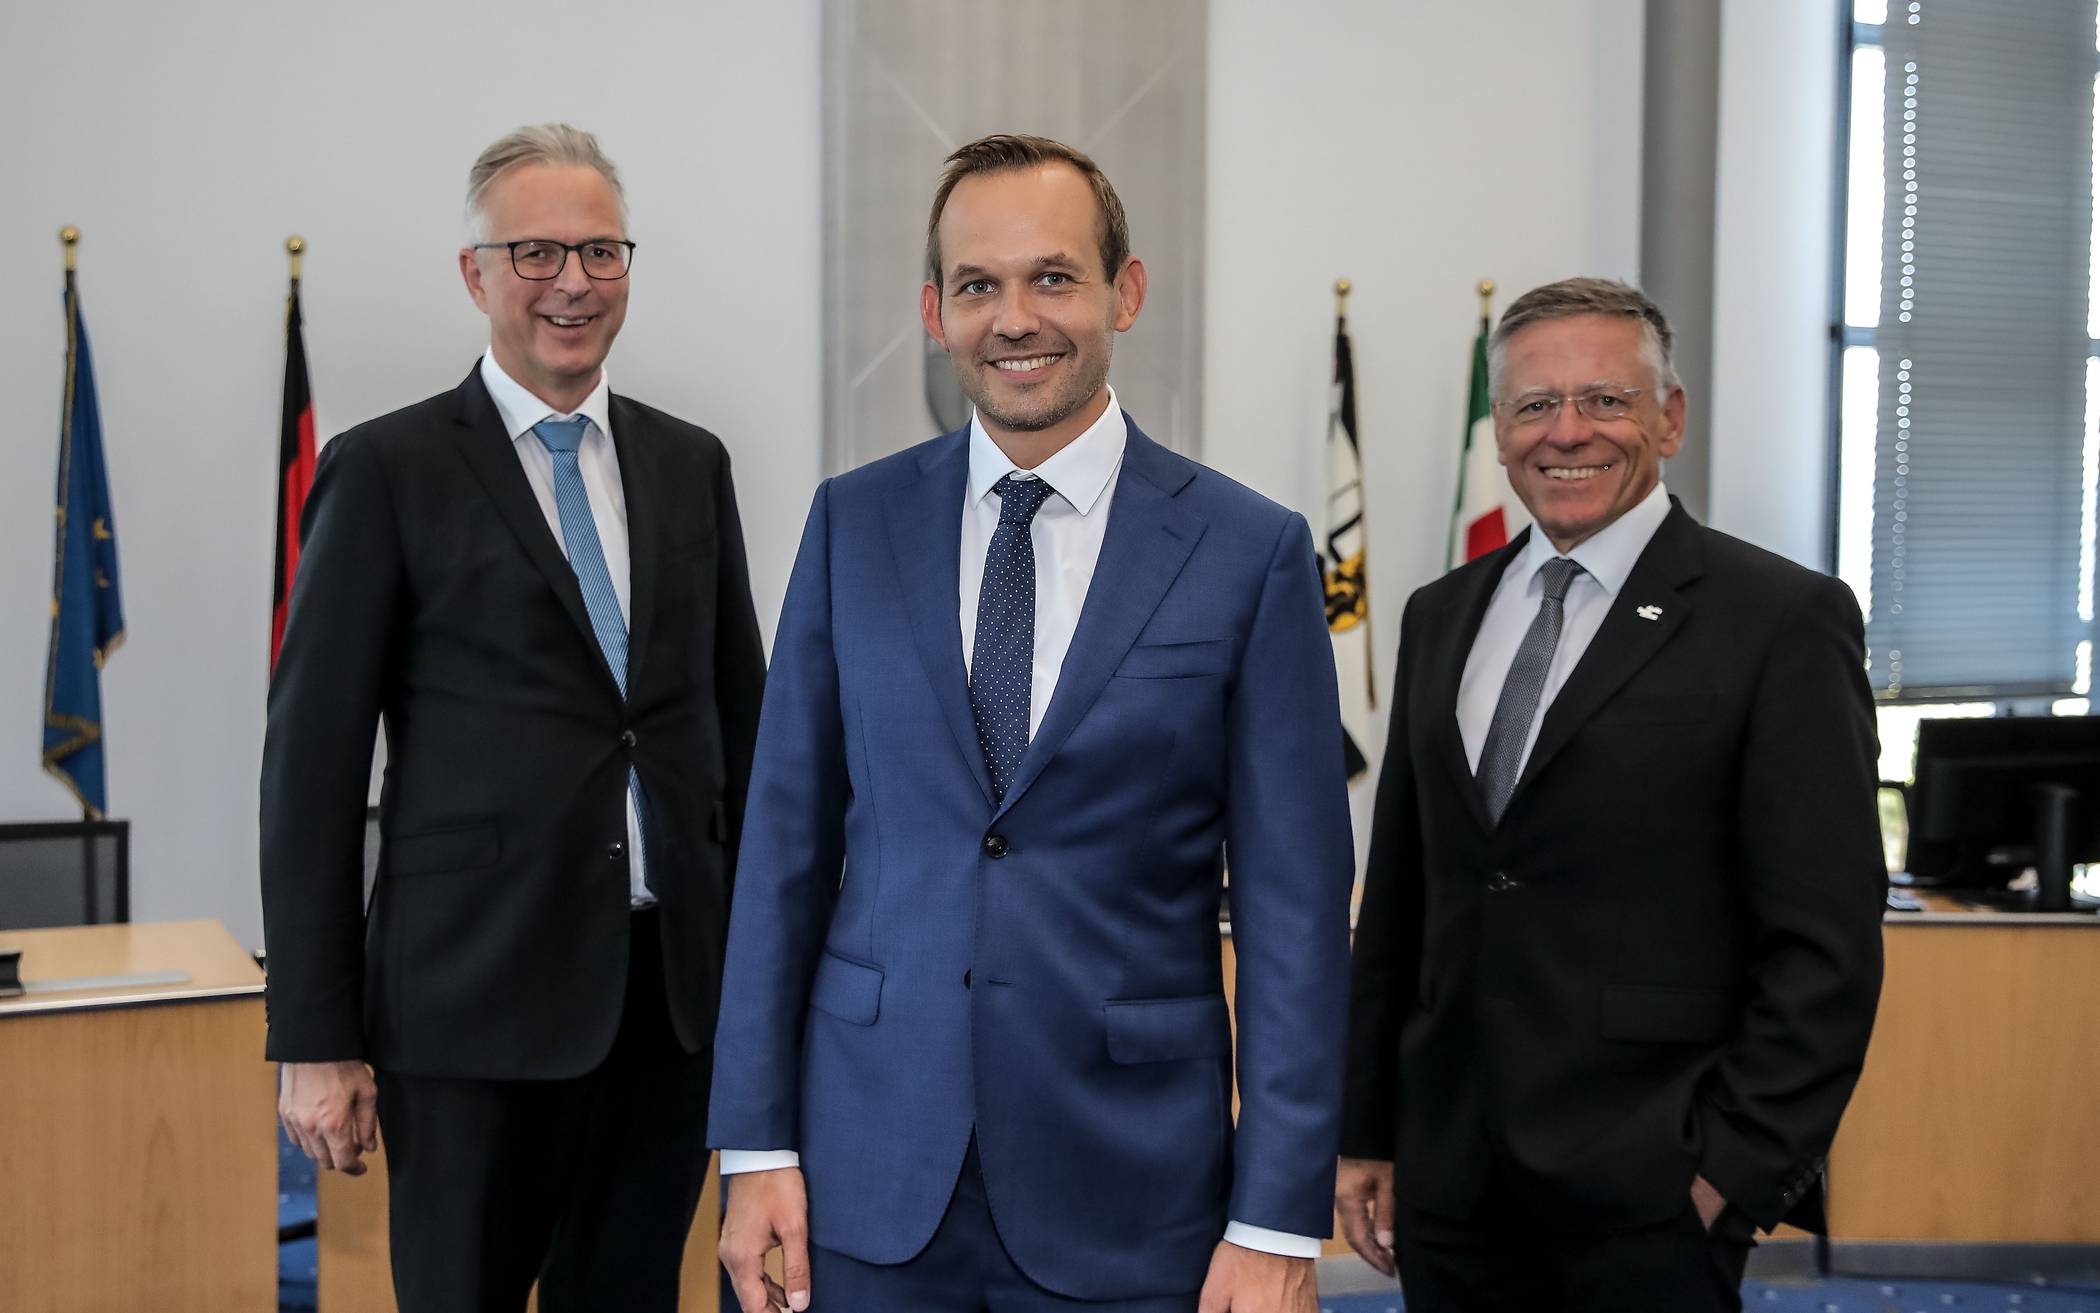  Kreisdirektor Dirk Brügge (links) und Landrat Hans-Jürgen Petrauschke (rechts) begrüßten Jens Bender, den neuen Leiter des Kreis-Sozialamtes. 